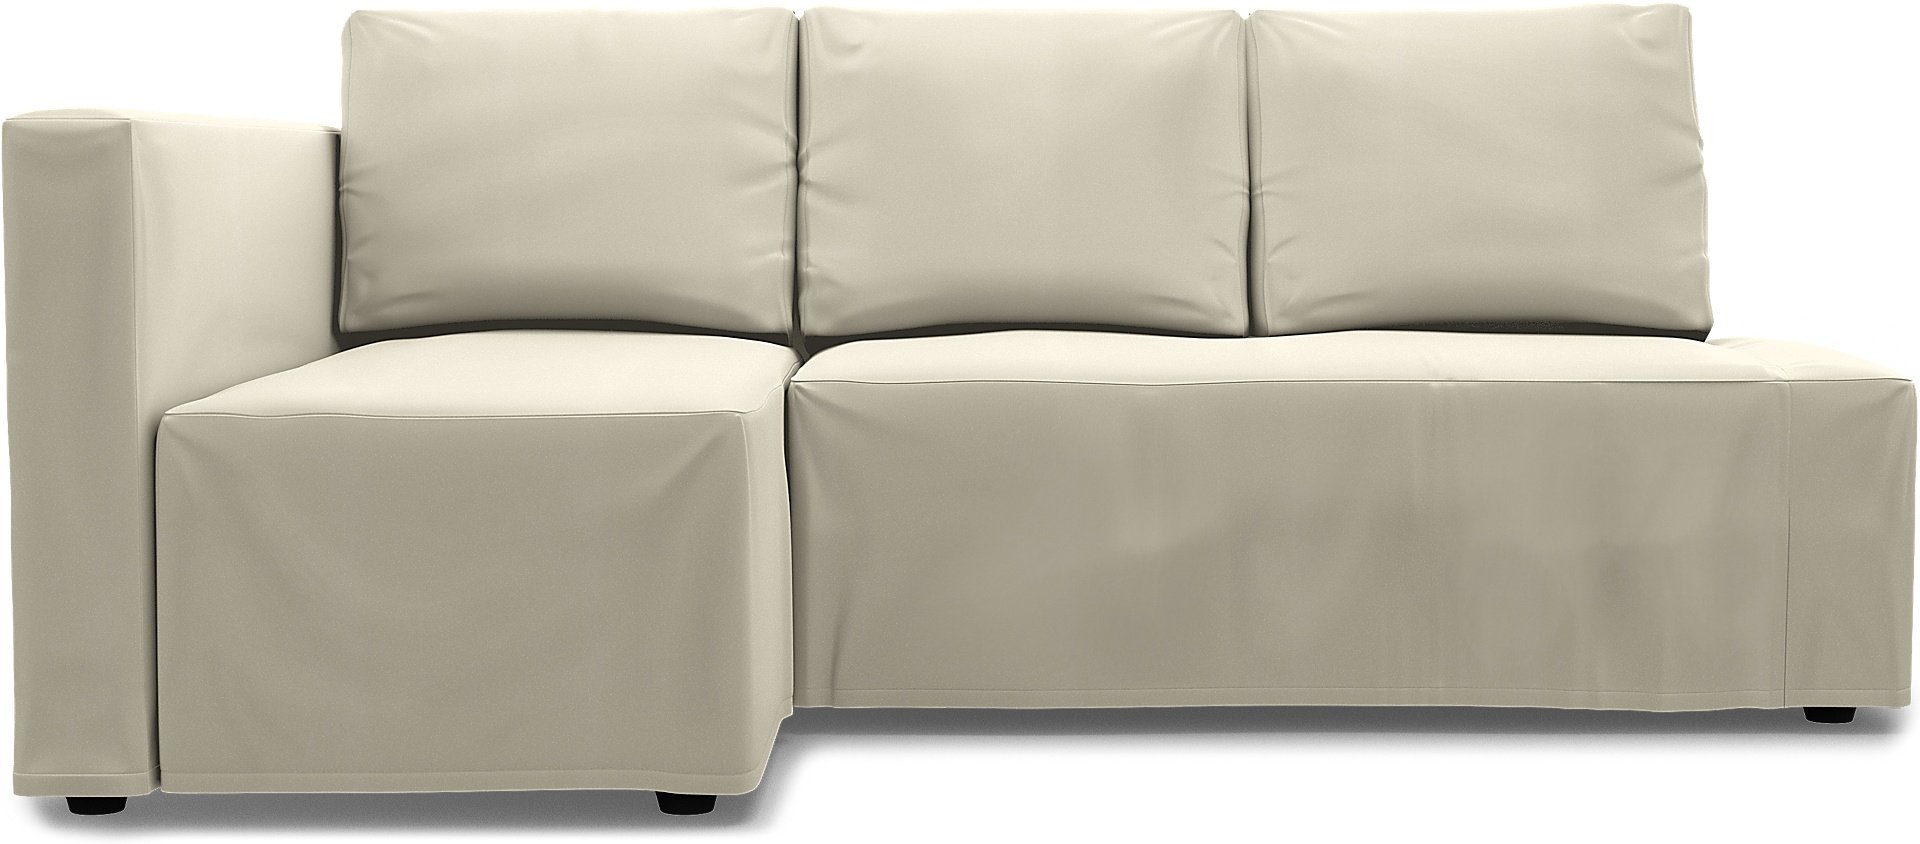 IKEA - Friheten Sofa Bed with Left Chaise Cover, Tofu, Cotton - Bemz